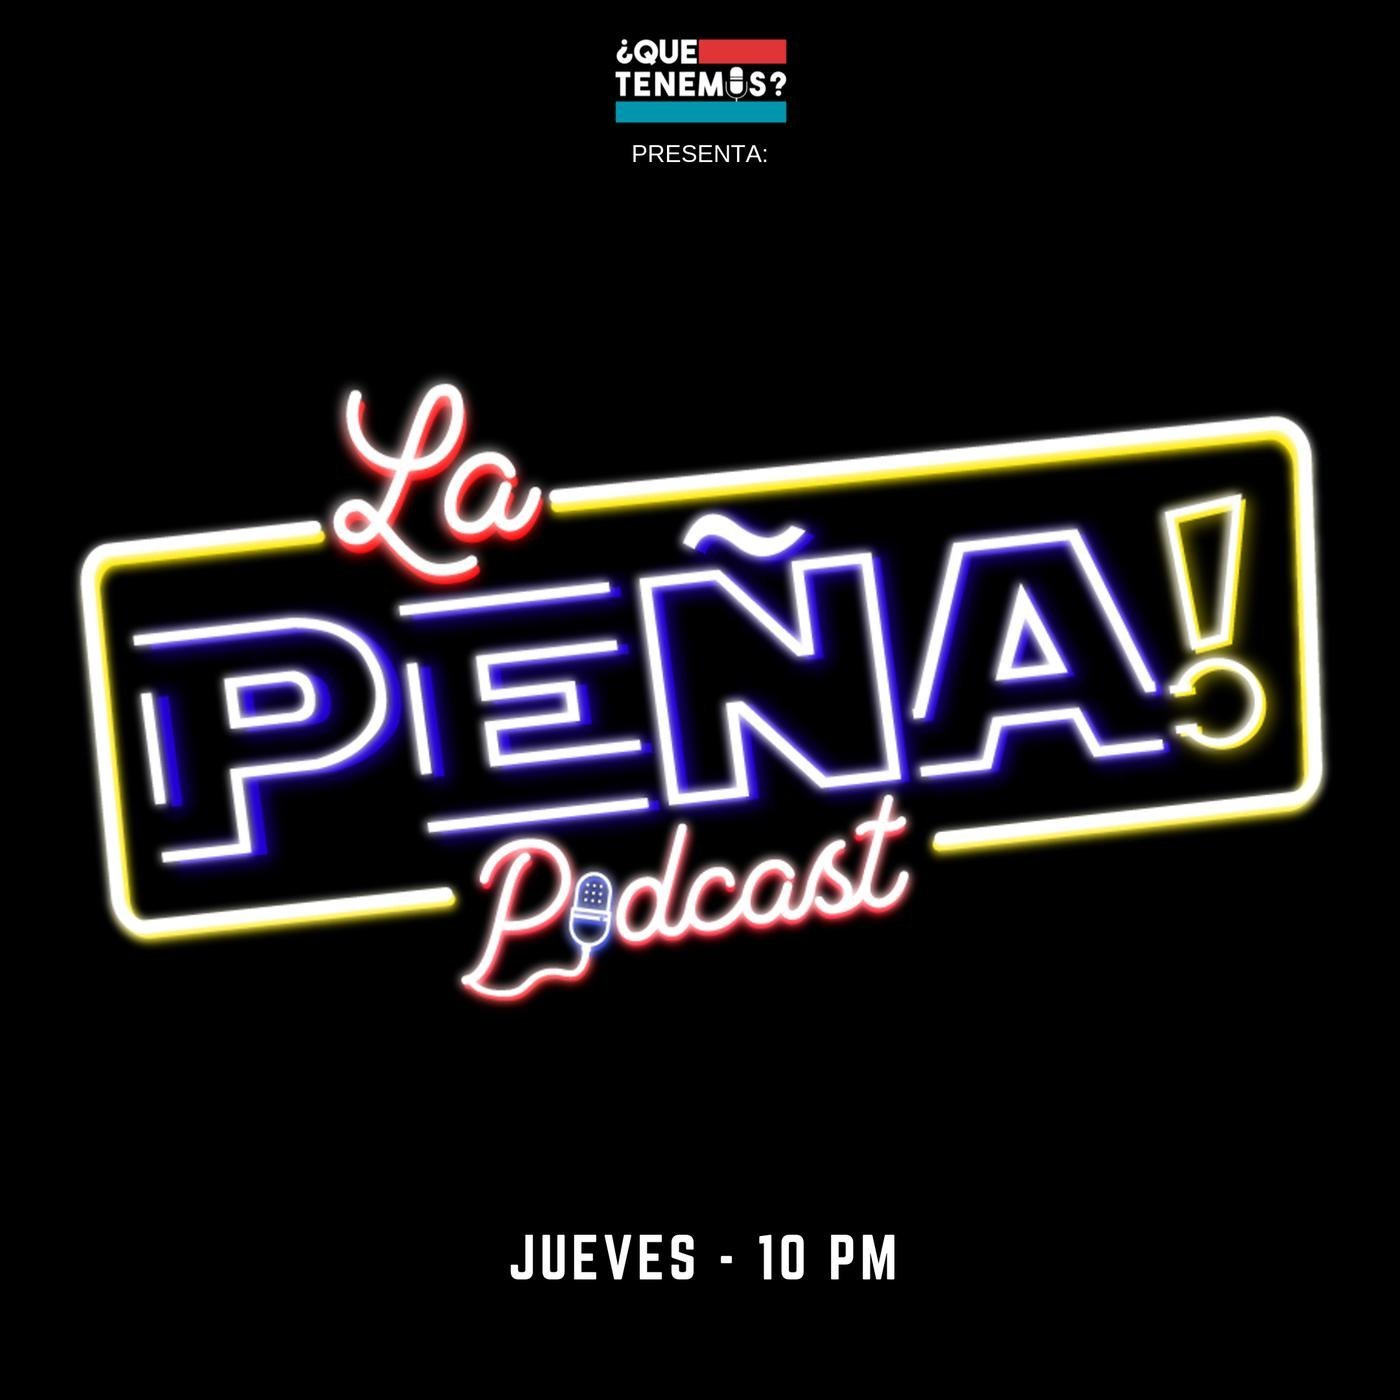 La Peña Podcast